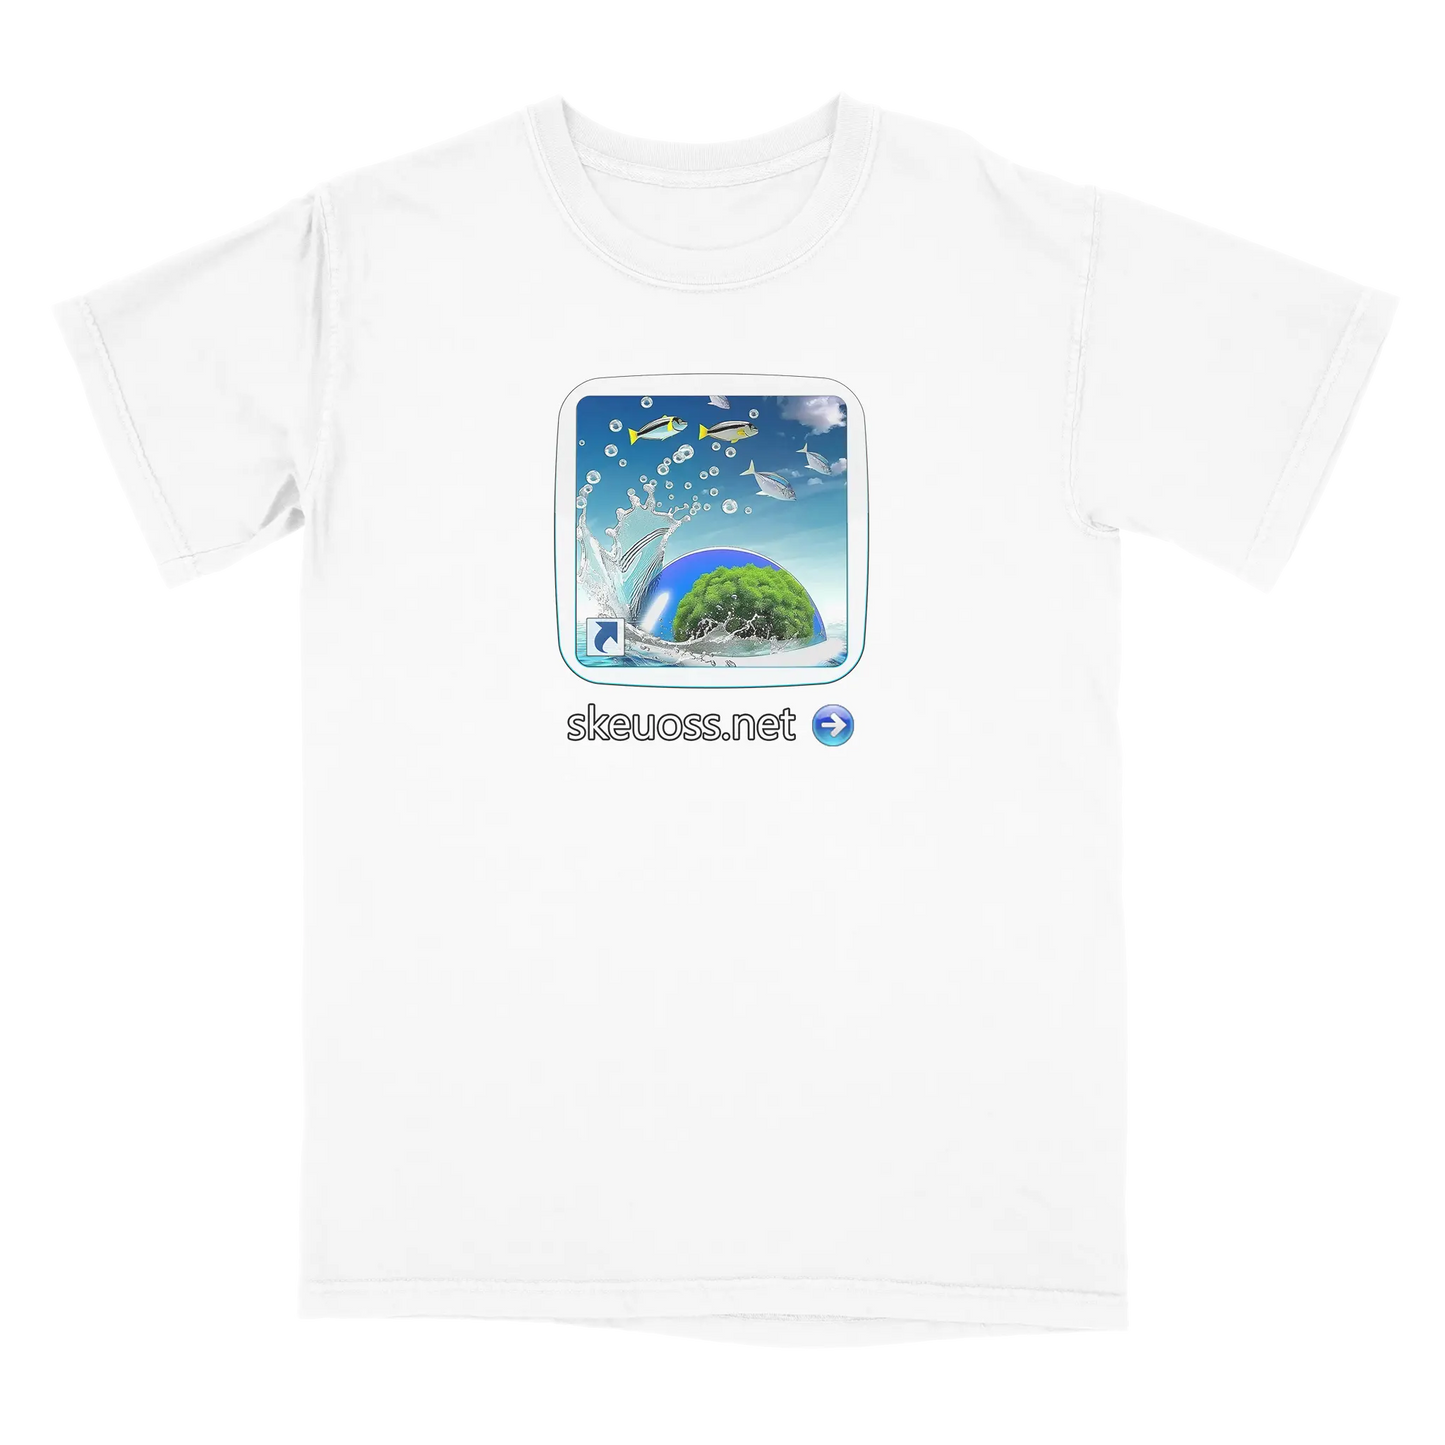 Frutiger Aero T-shirt - User Login Collection - User 354